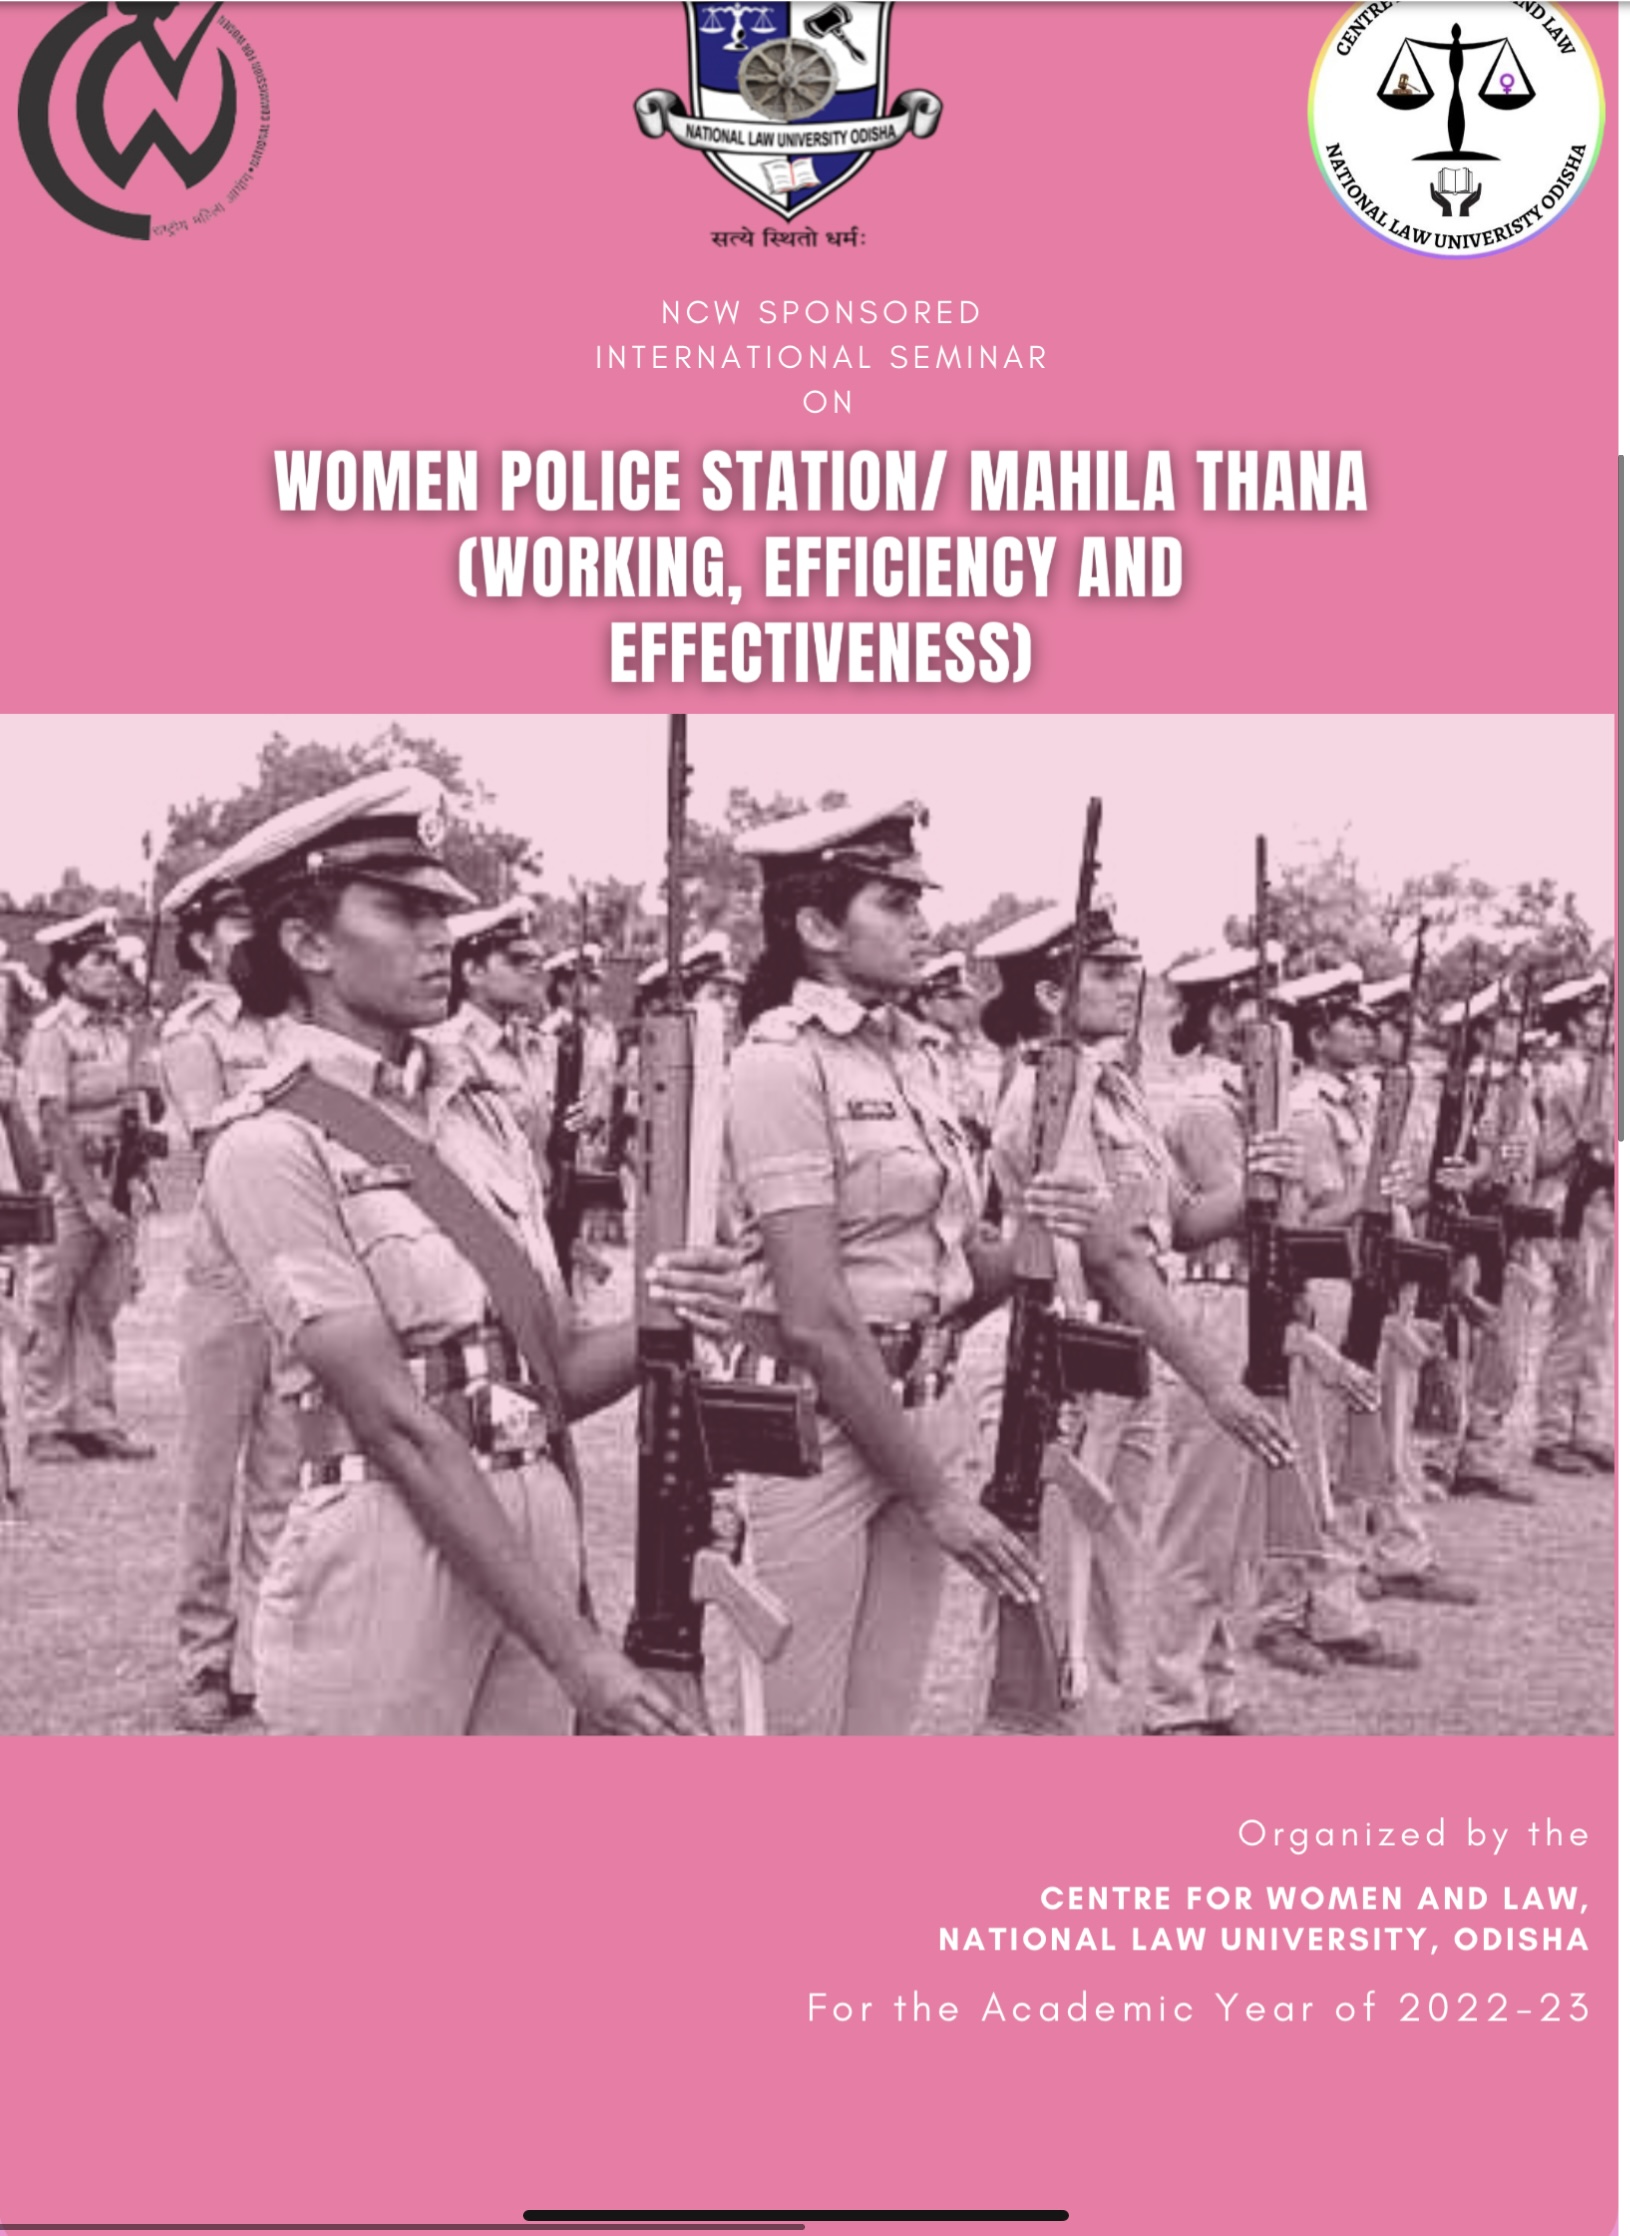 NCW International Seminar on ” Women Police Station/ Mahila Thana (Working,  Efficiency and  Effectiveness: 14th October 2022